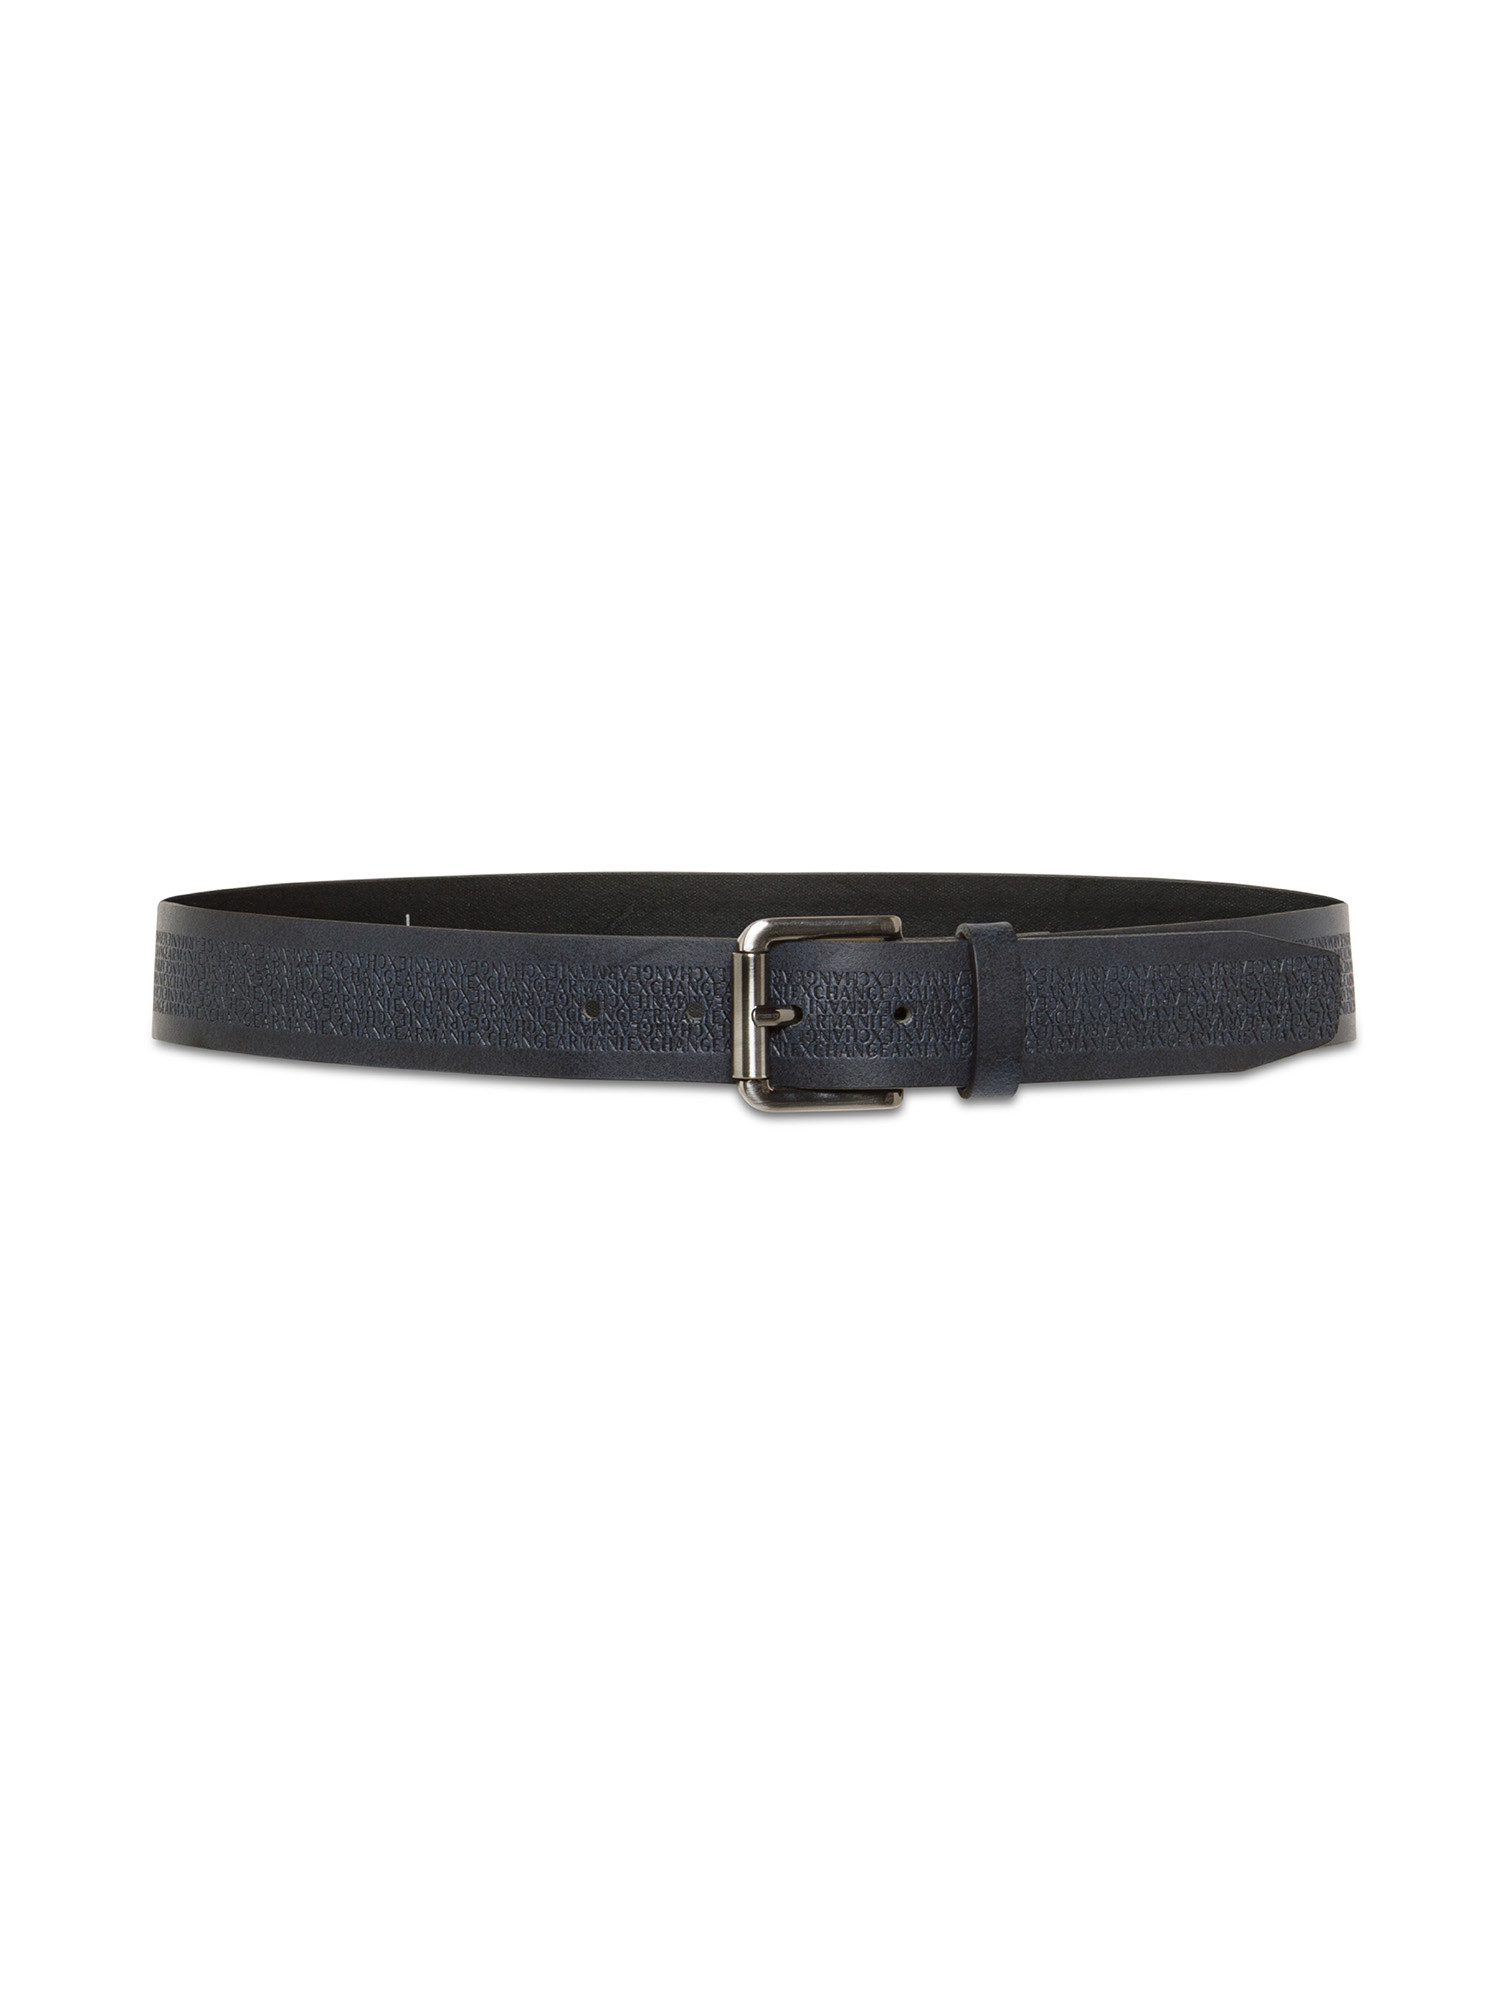 Armani Exchange - Leather belt with logo, Dark Blue, large image number 1